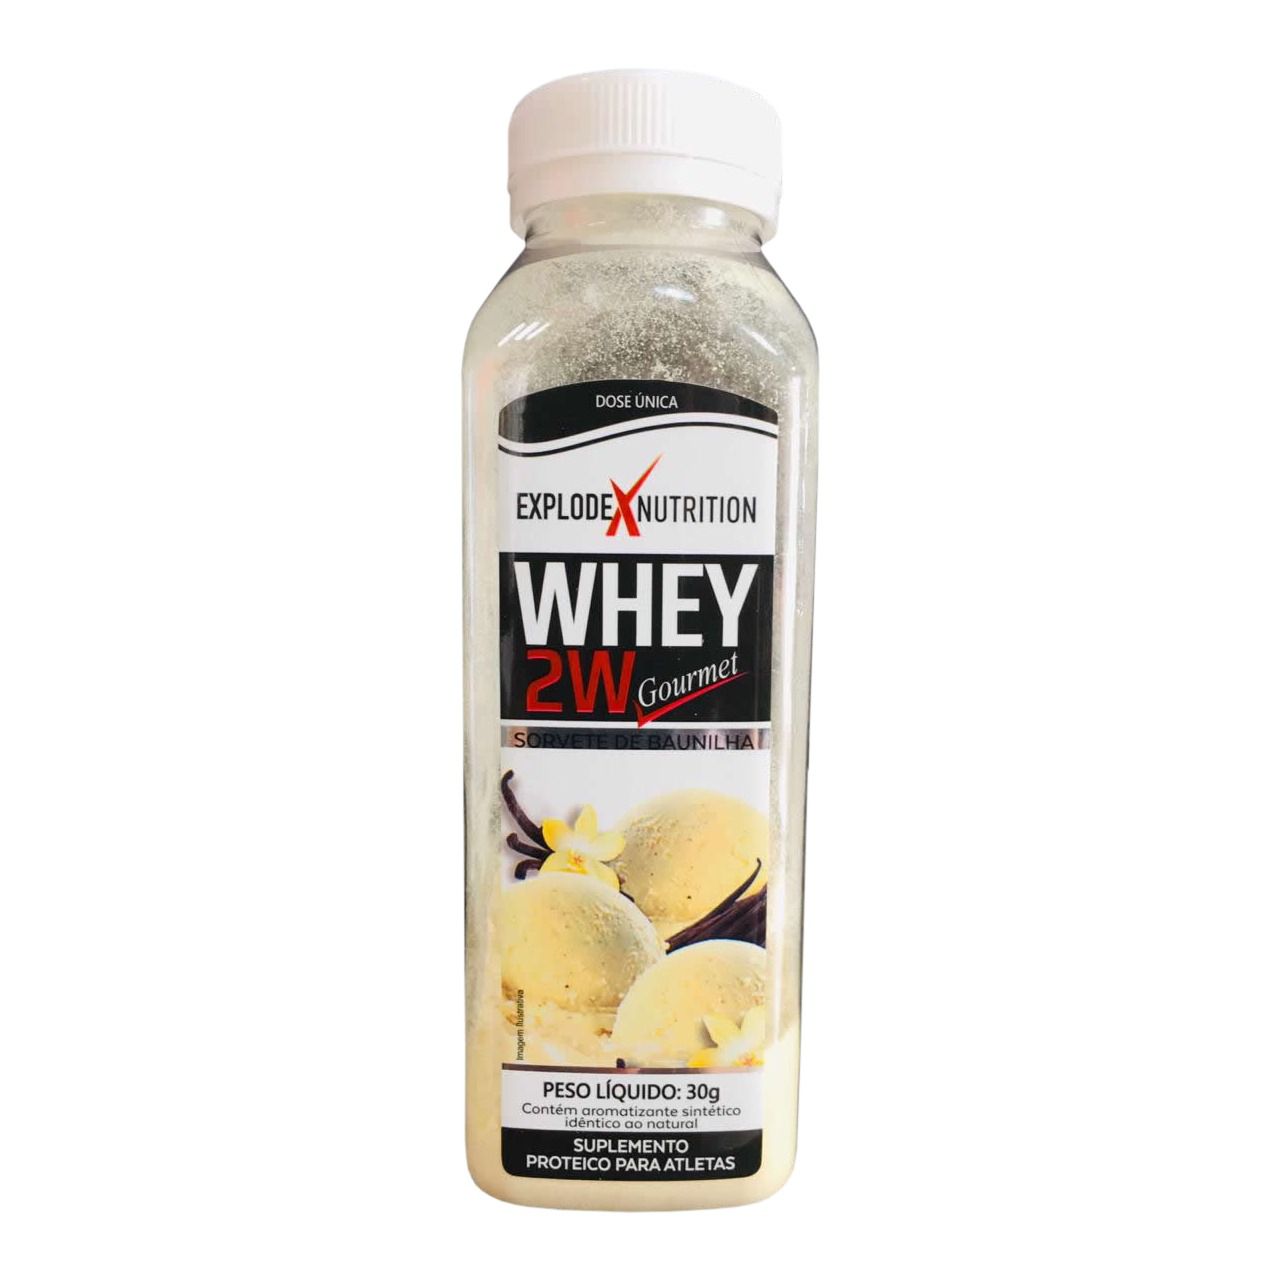 Whey 2W Gourmet Explode Nutrition - 30g (1 dose)